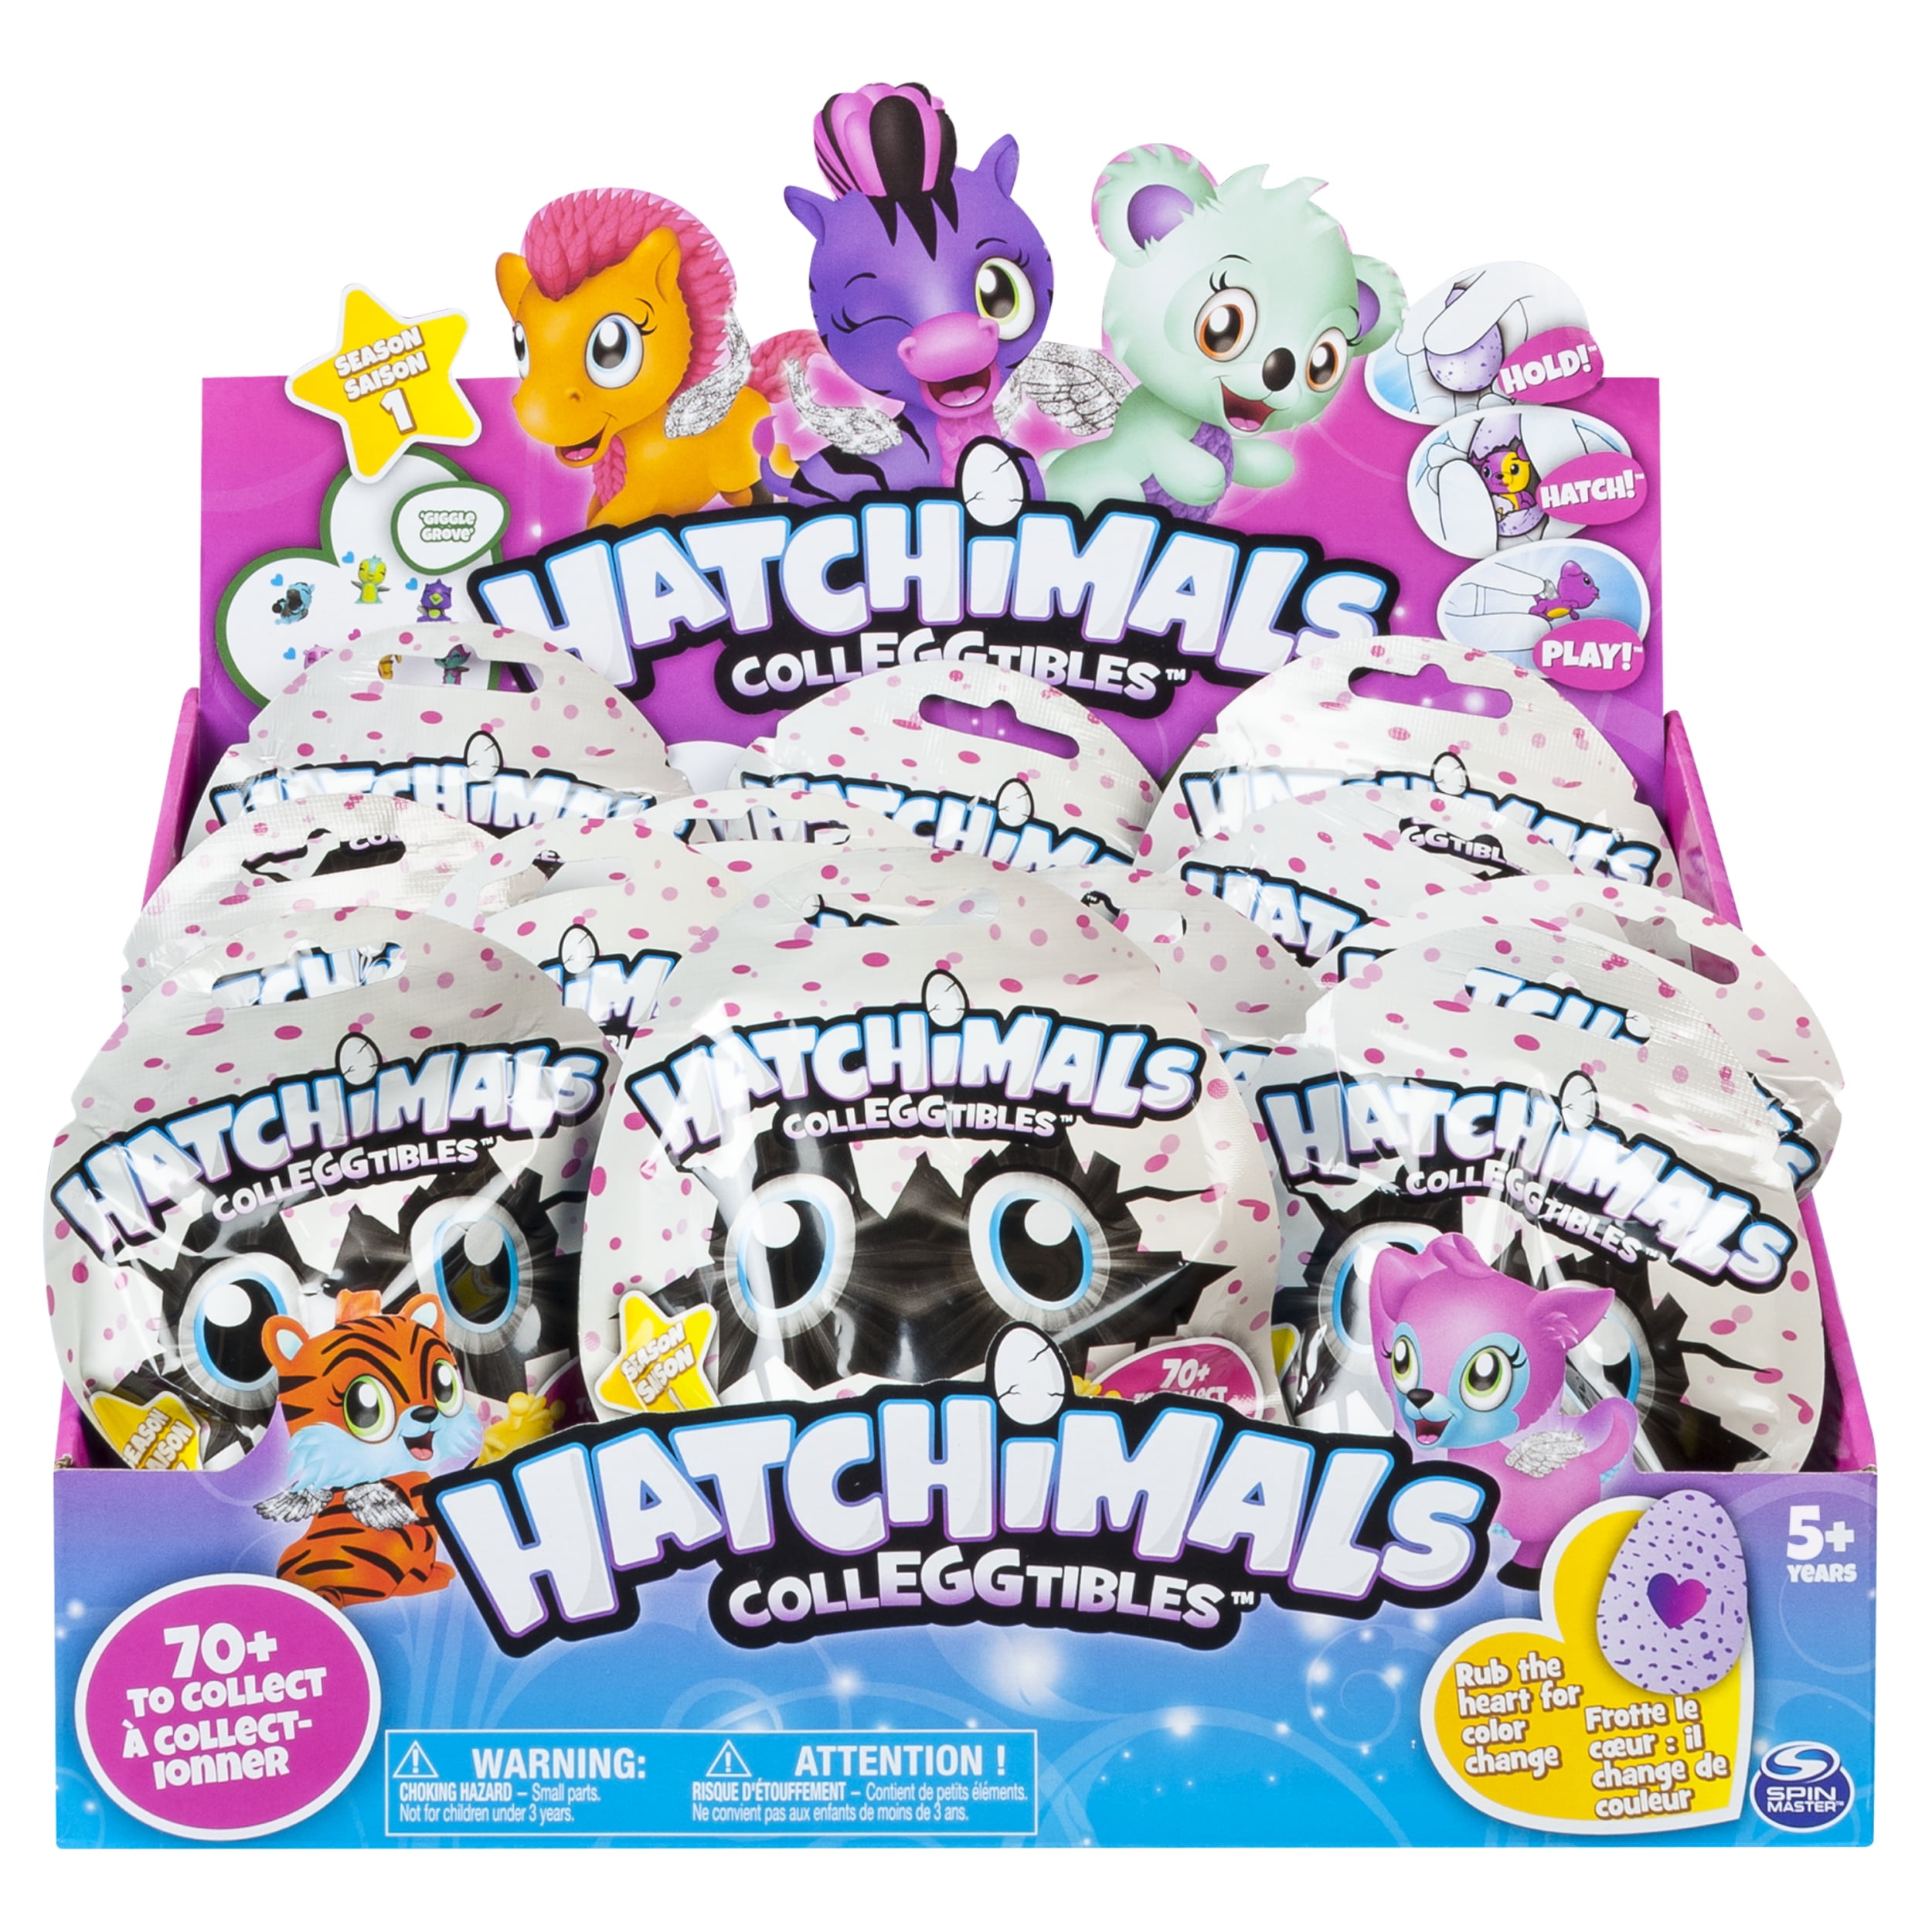 Lot of 3 Hatchimals Colleggtibles Blind Pack Season 1 Surprise Spinmaster Eggs 